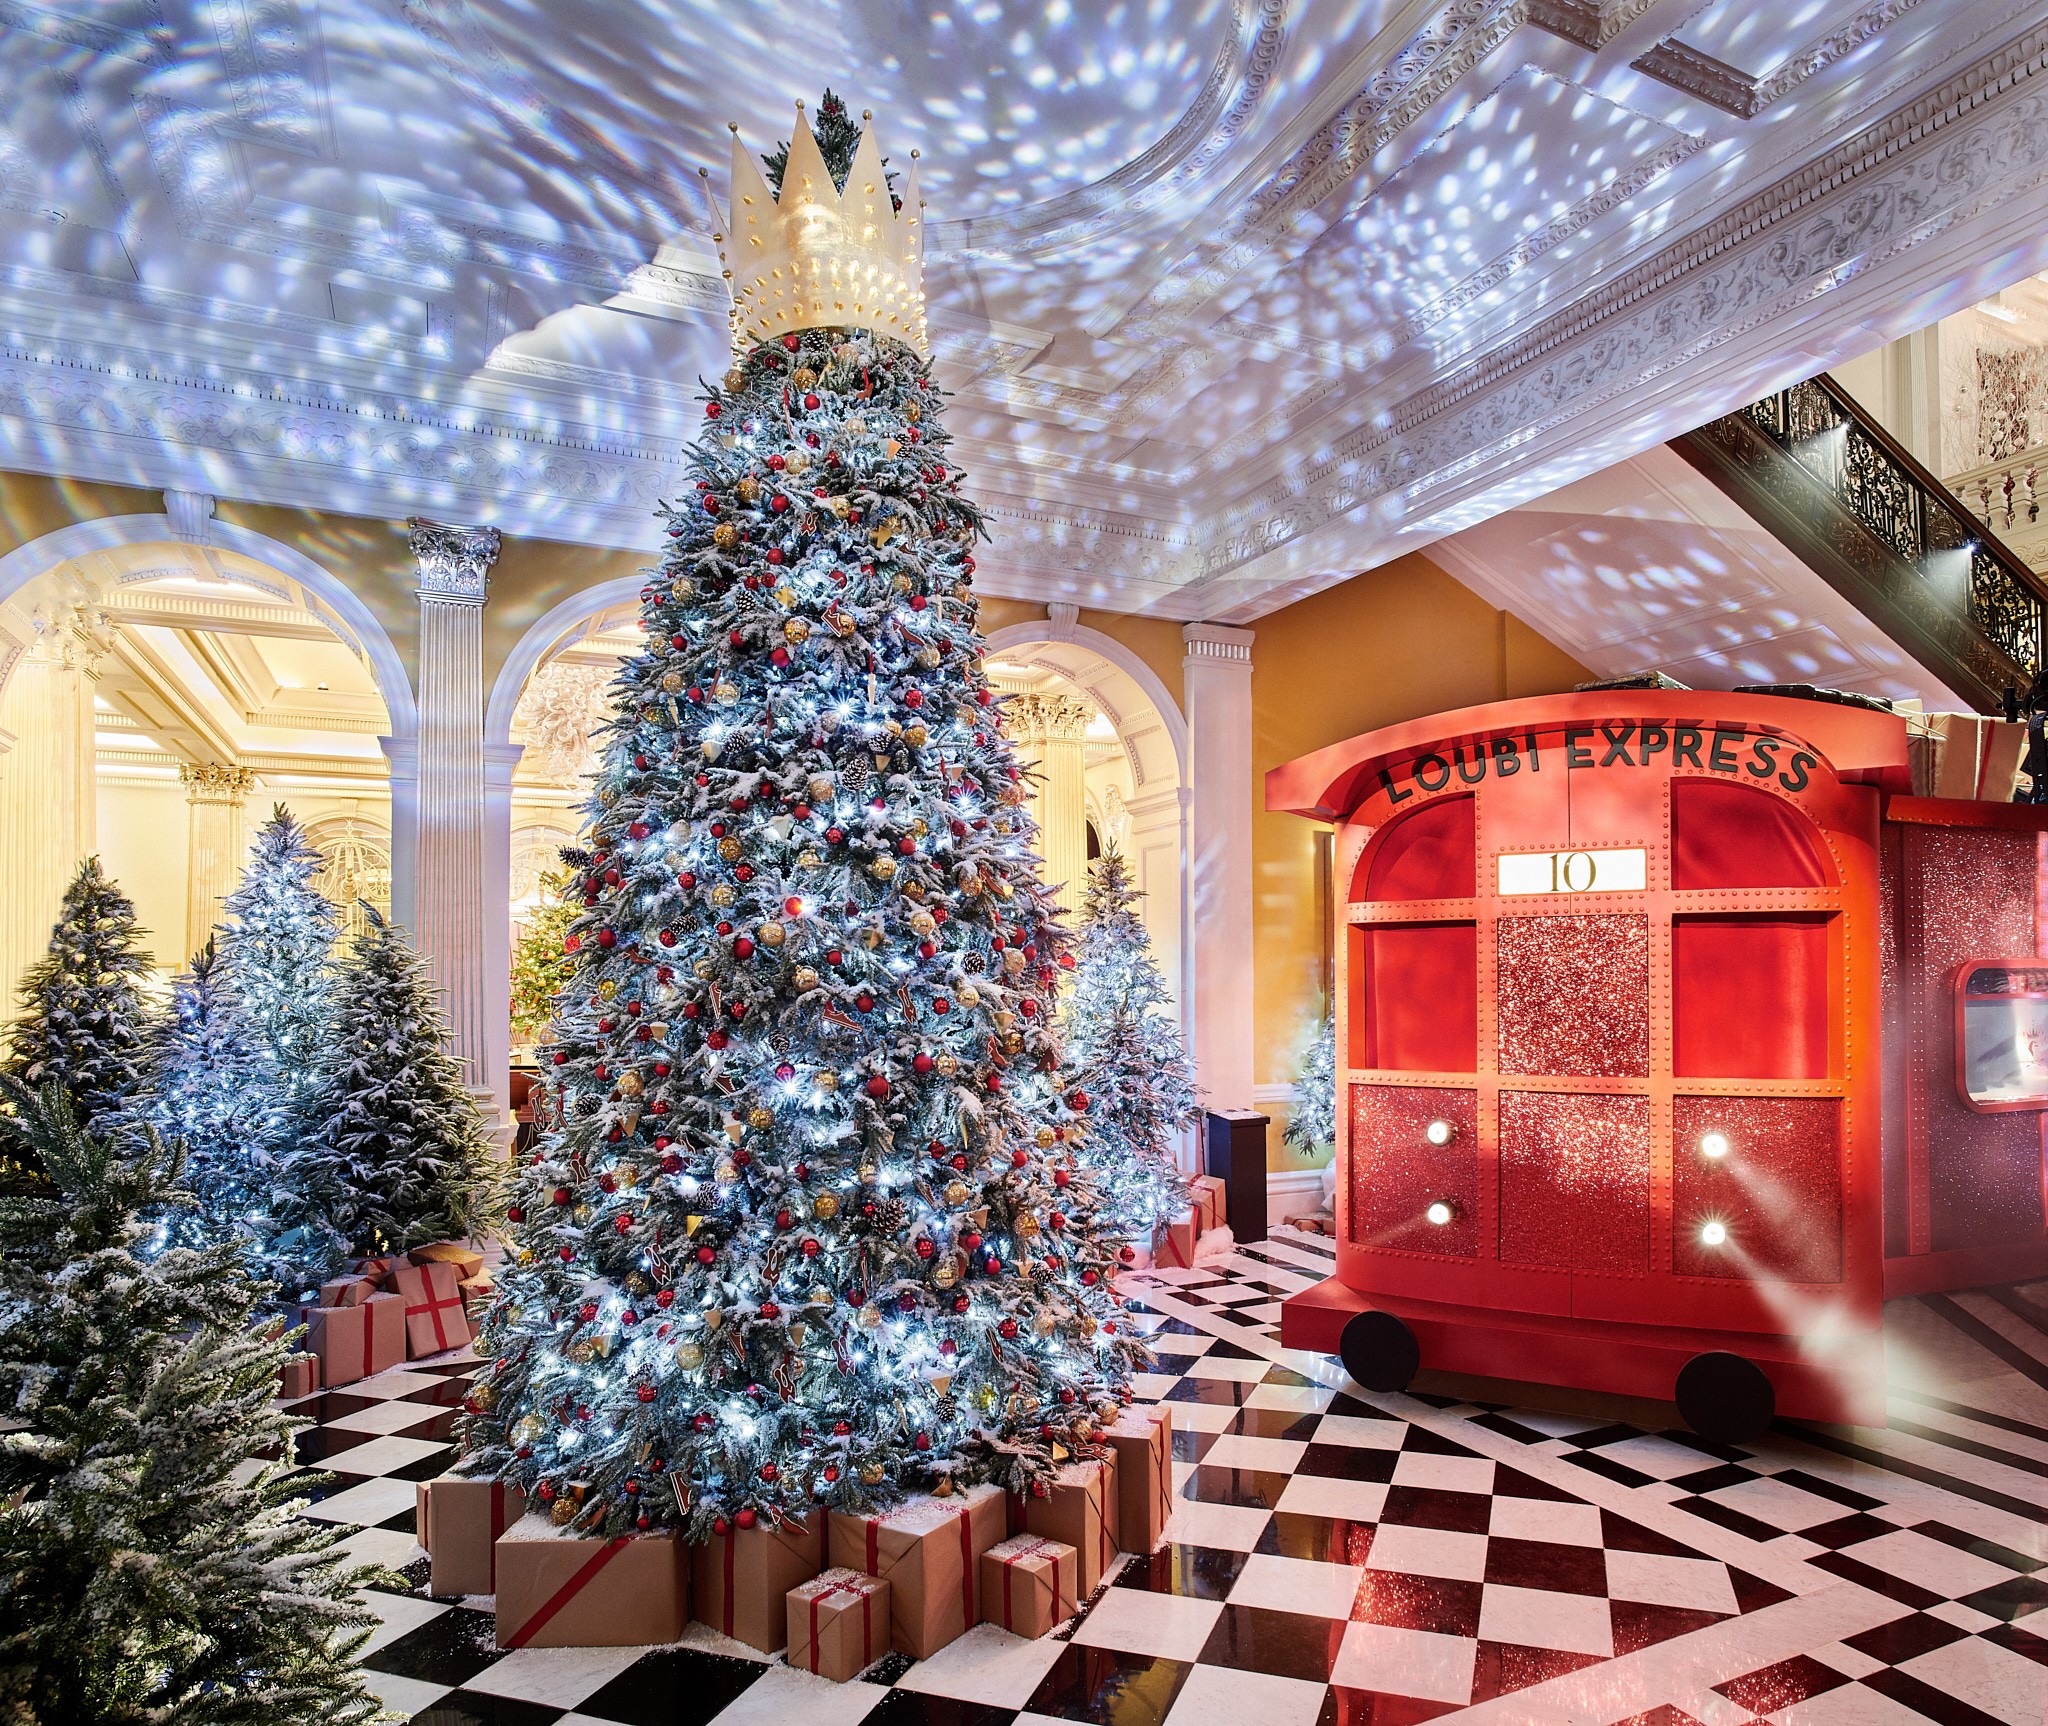 Upcycled Louis Vuitton Swarovski Crystal Christmas Tree Ornament